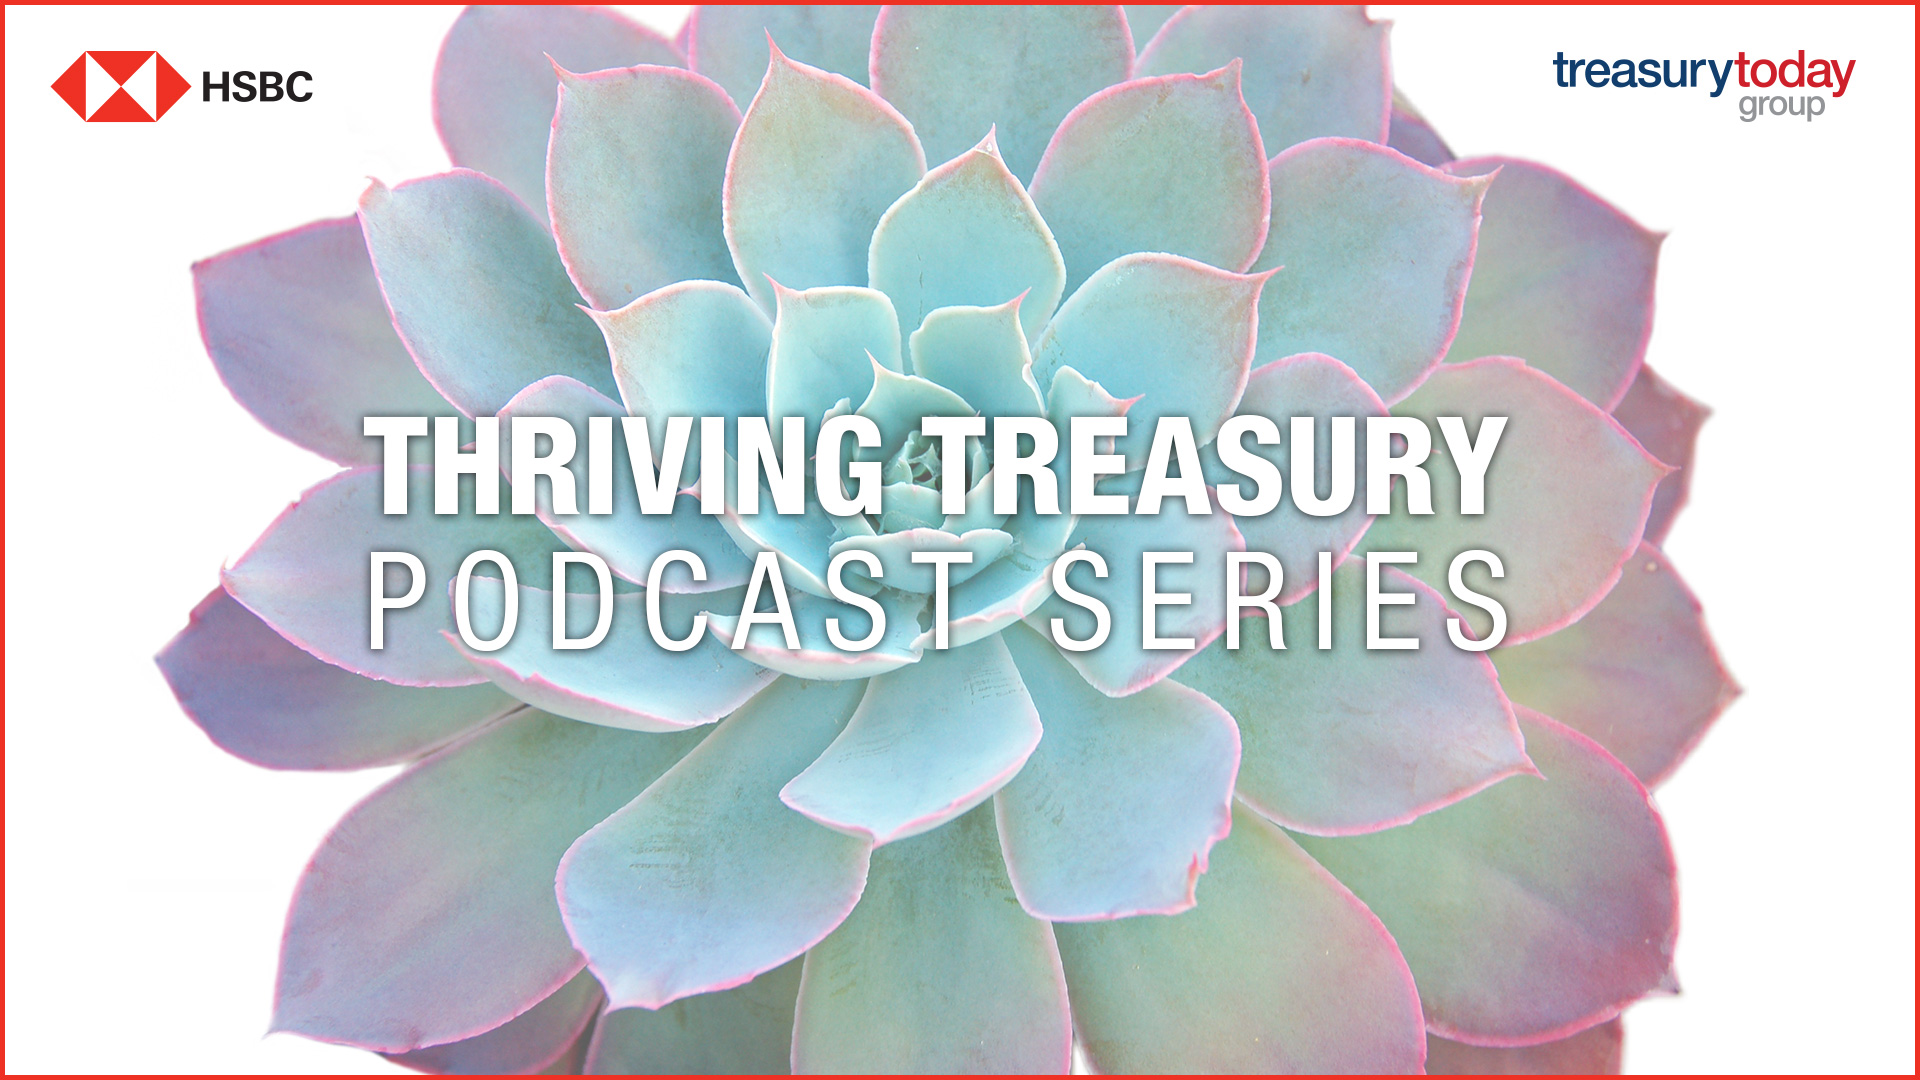 HSBC Thriving Treasury podcast series